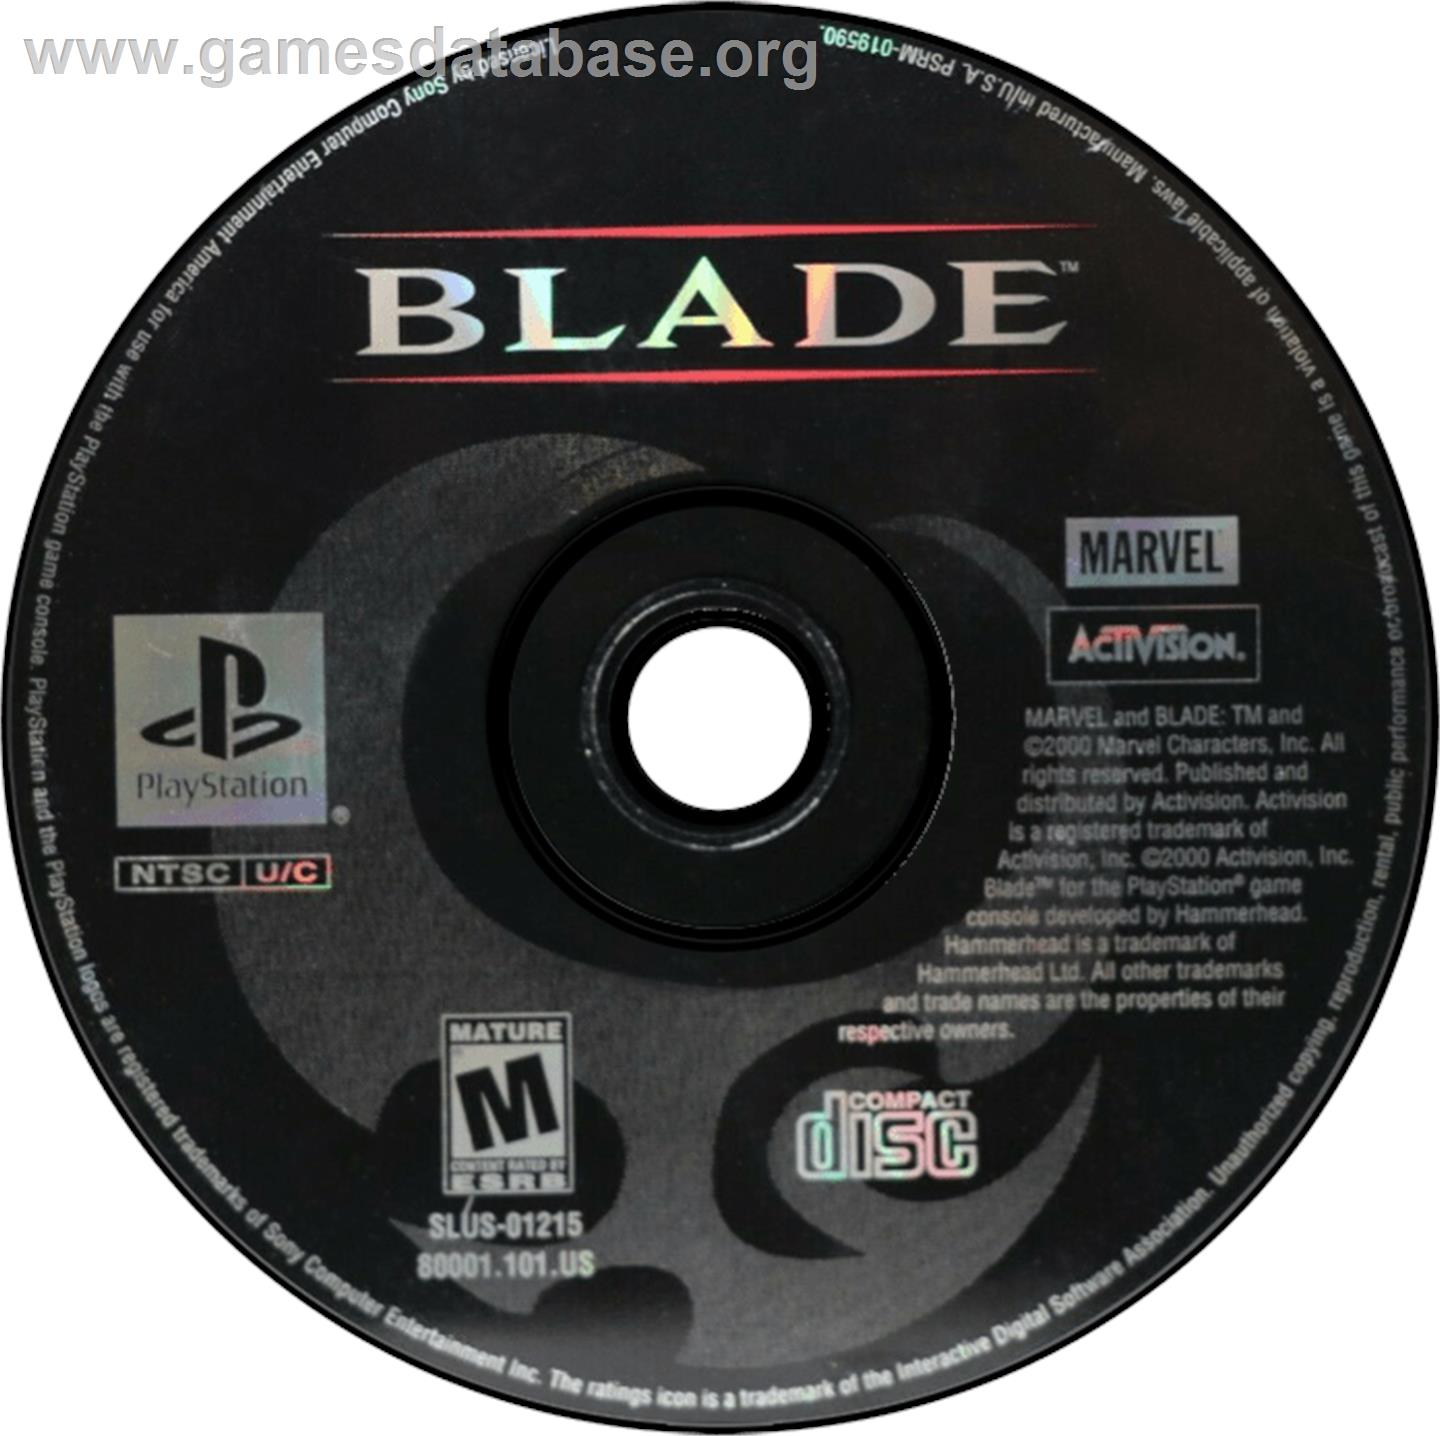 Blade - Sony Playstation - Artwork - Disc